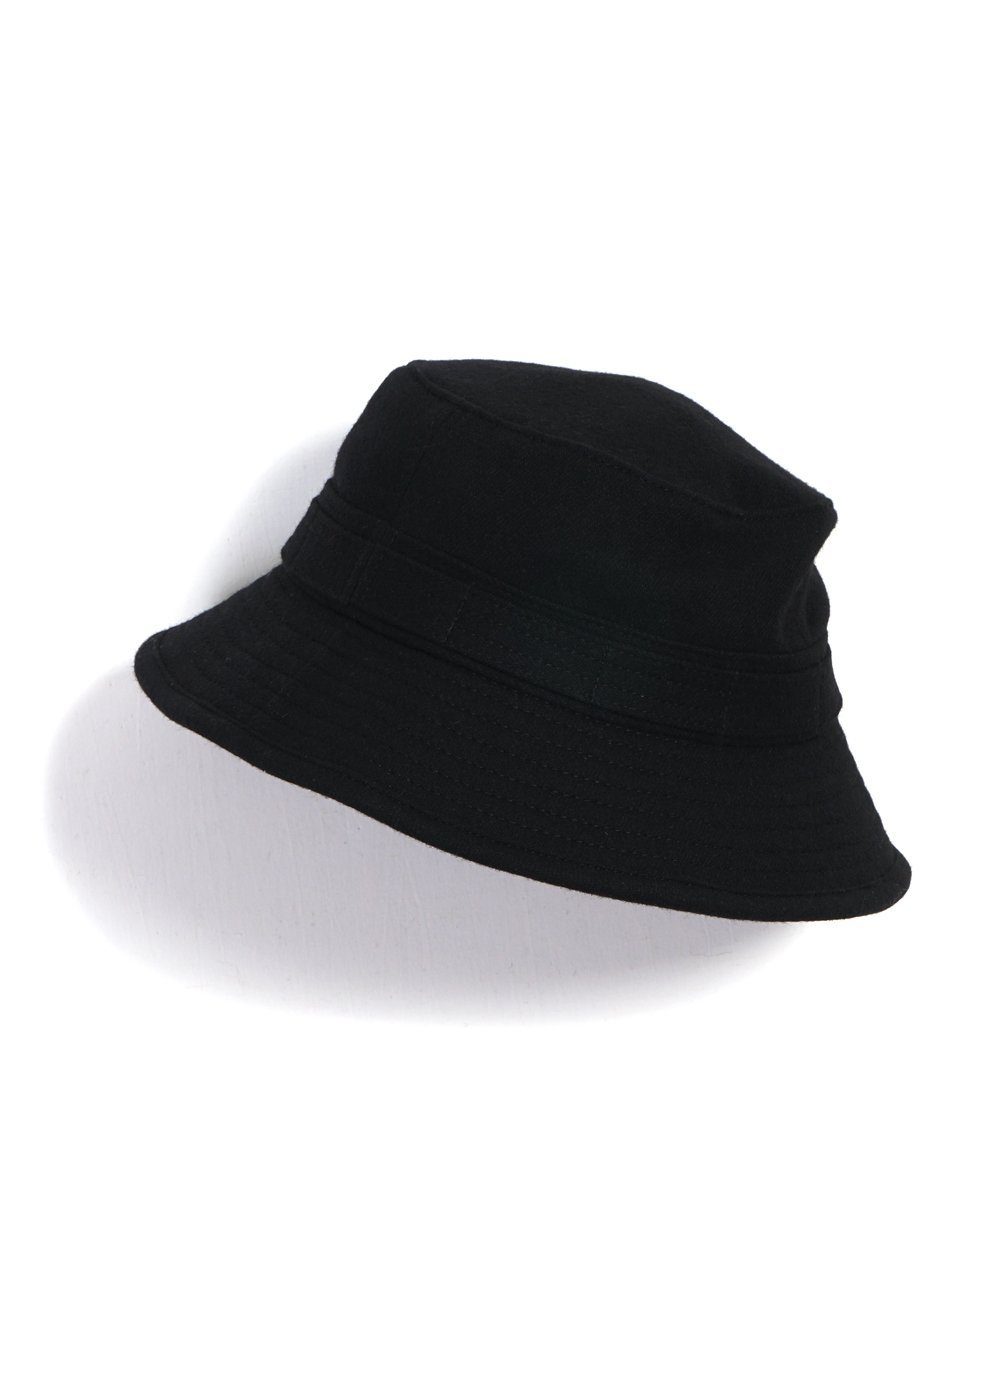 HANSEN Garments - EDVARD | Bucket Hat With Earflaps | Black - HANSEN Garments